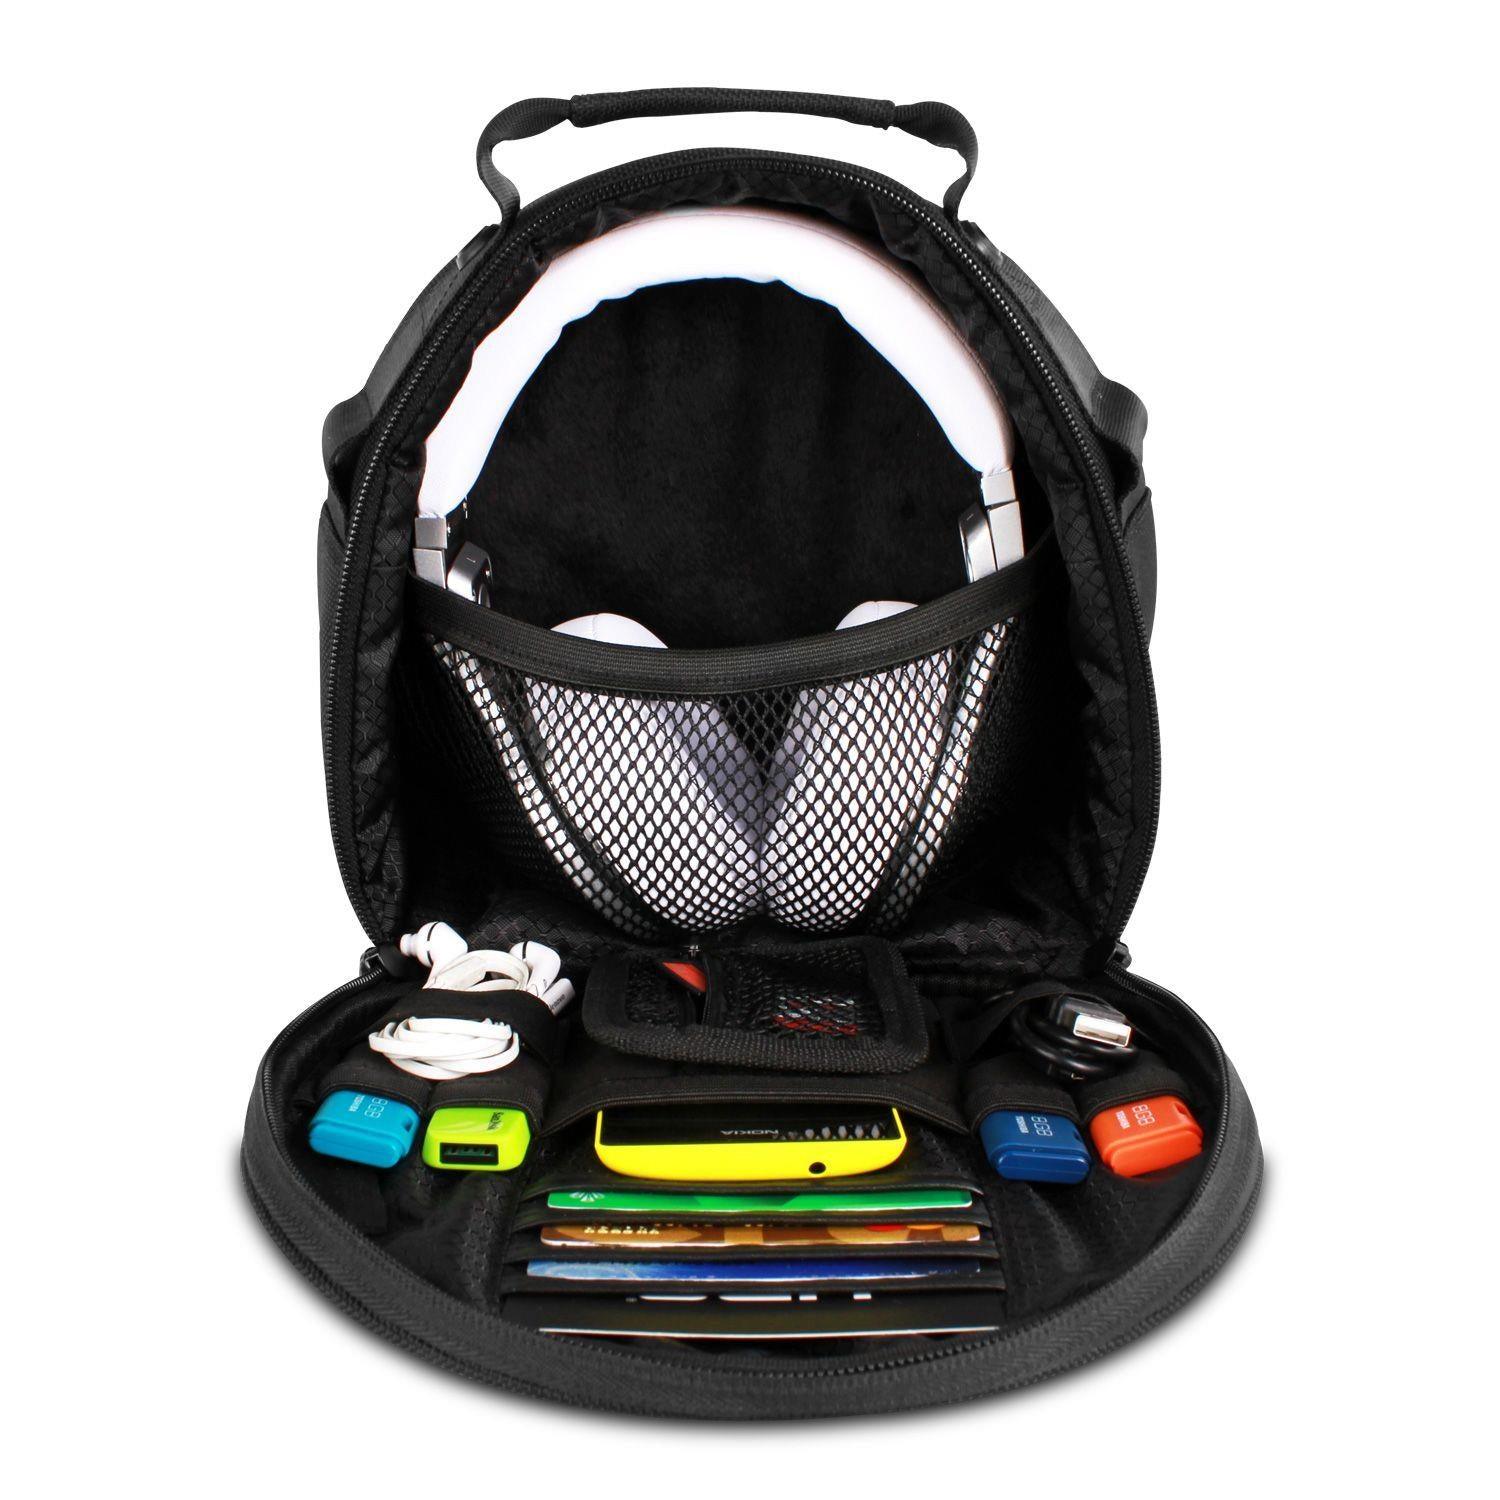 UDG Ultimate DIGI Headphone Bag Black - DY Pro Audio